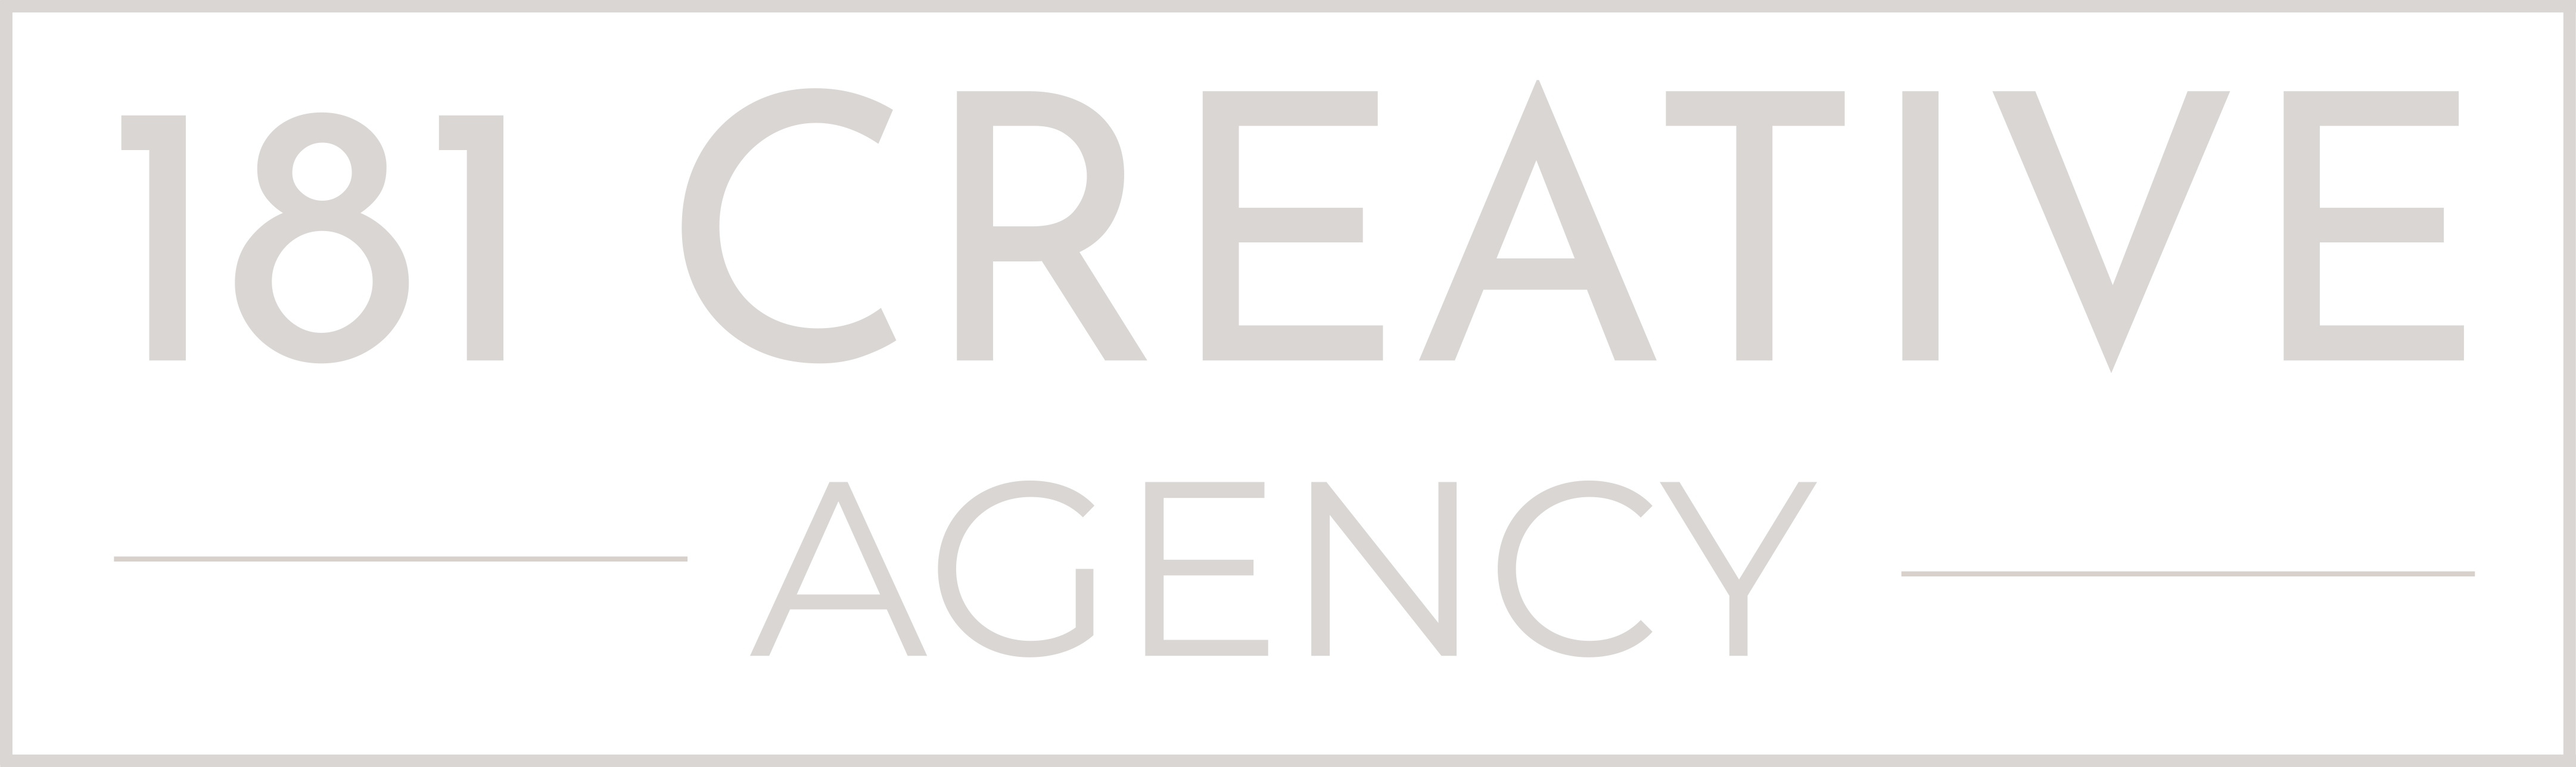 Client Portal • 181 Creative Agency